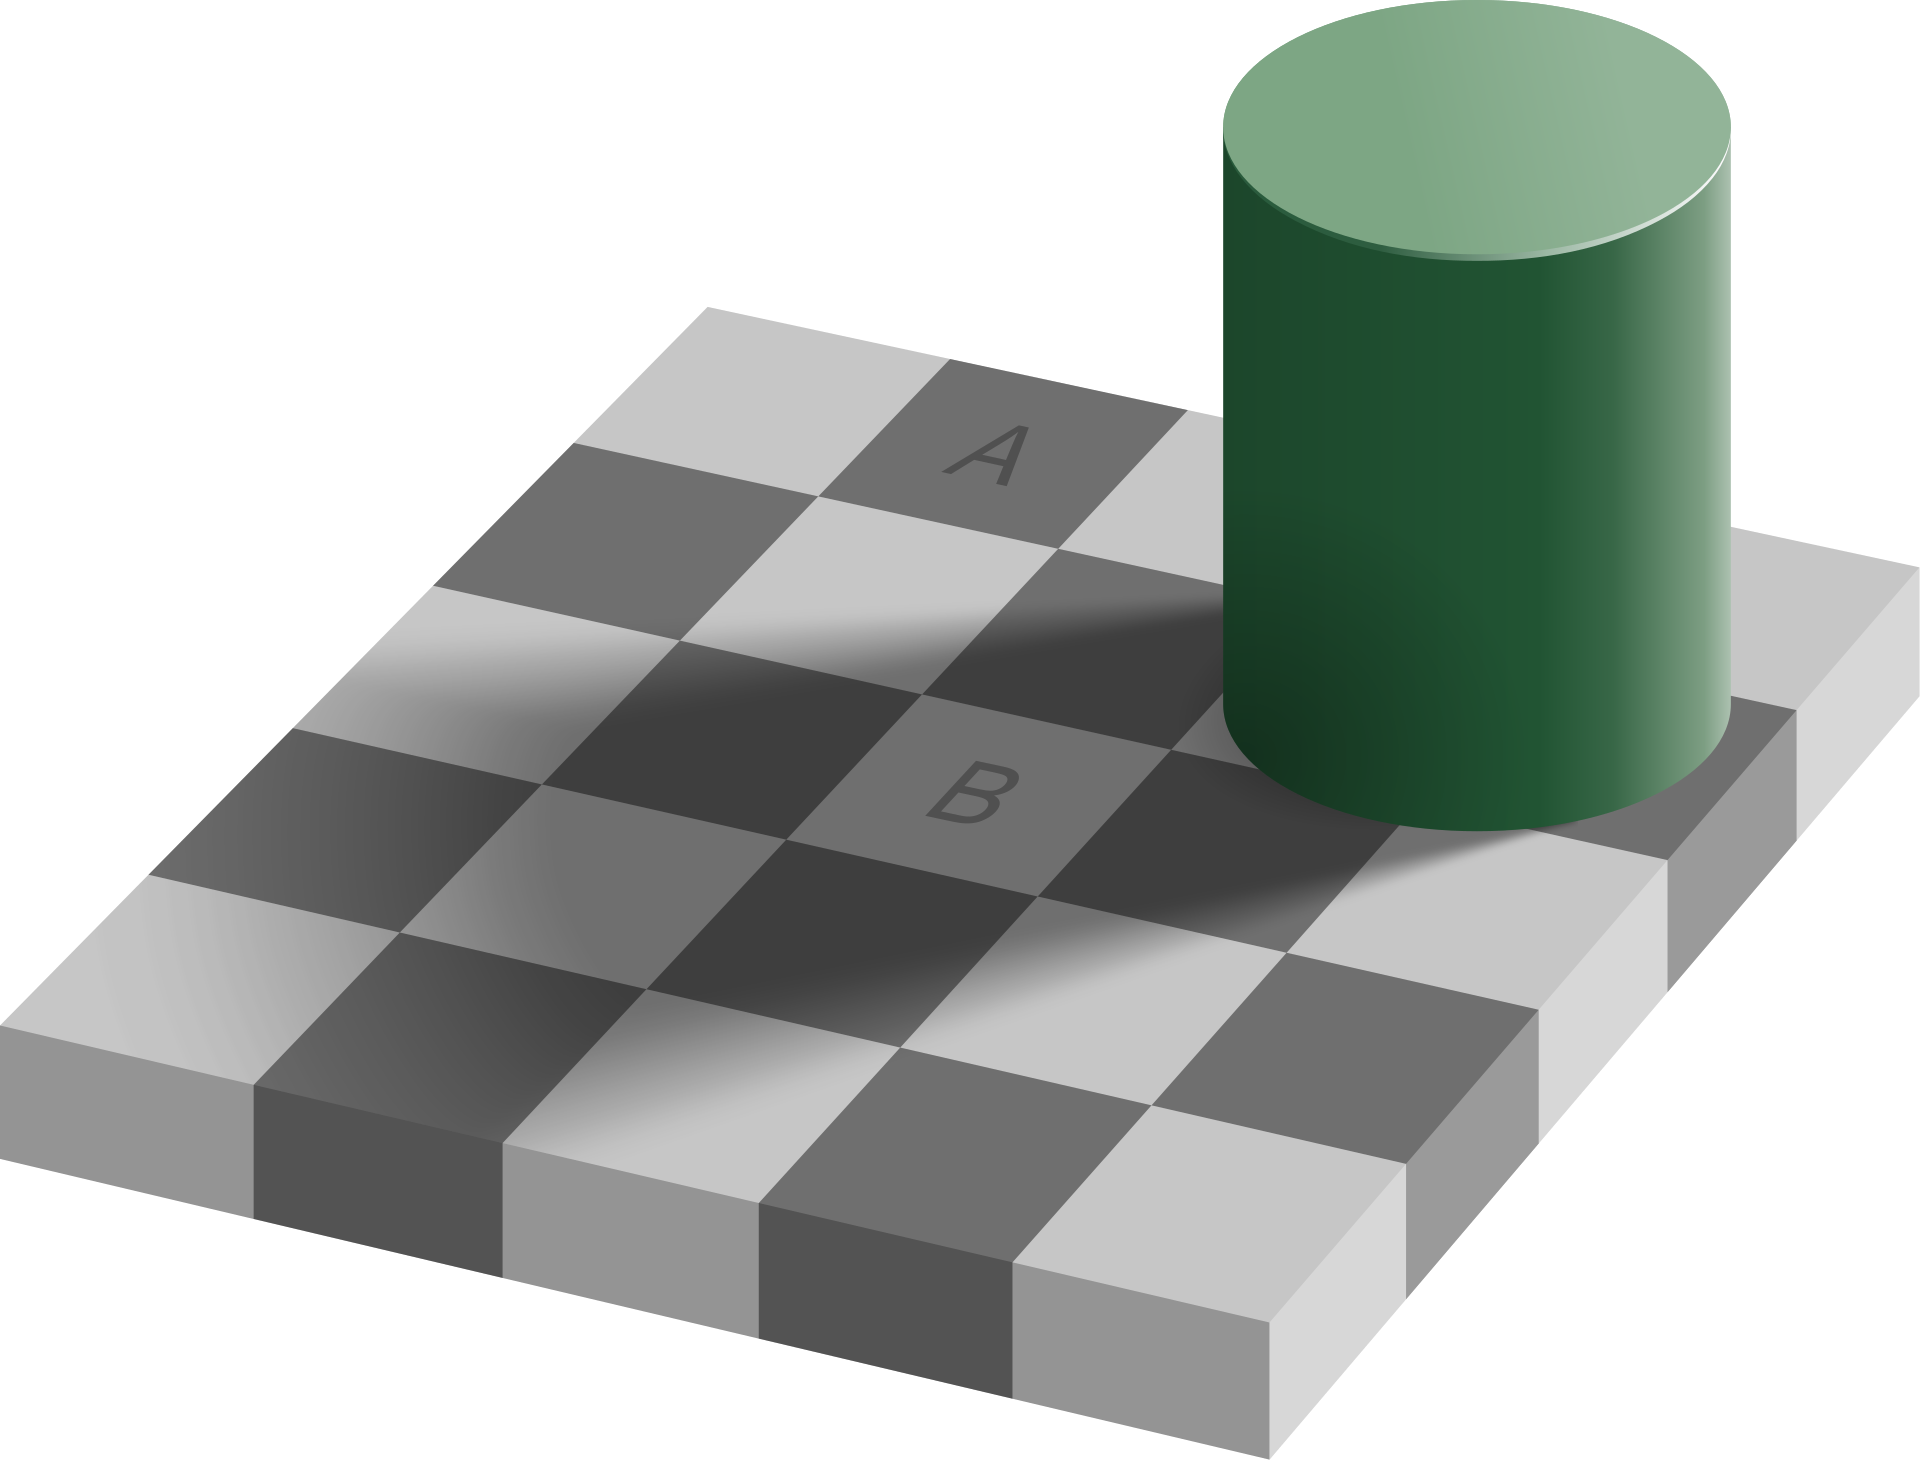 The checker shadow illusion. [Wikipedia](https://en.wikipedia.org/wiki/Checker_shadow_illusion)